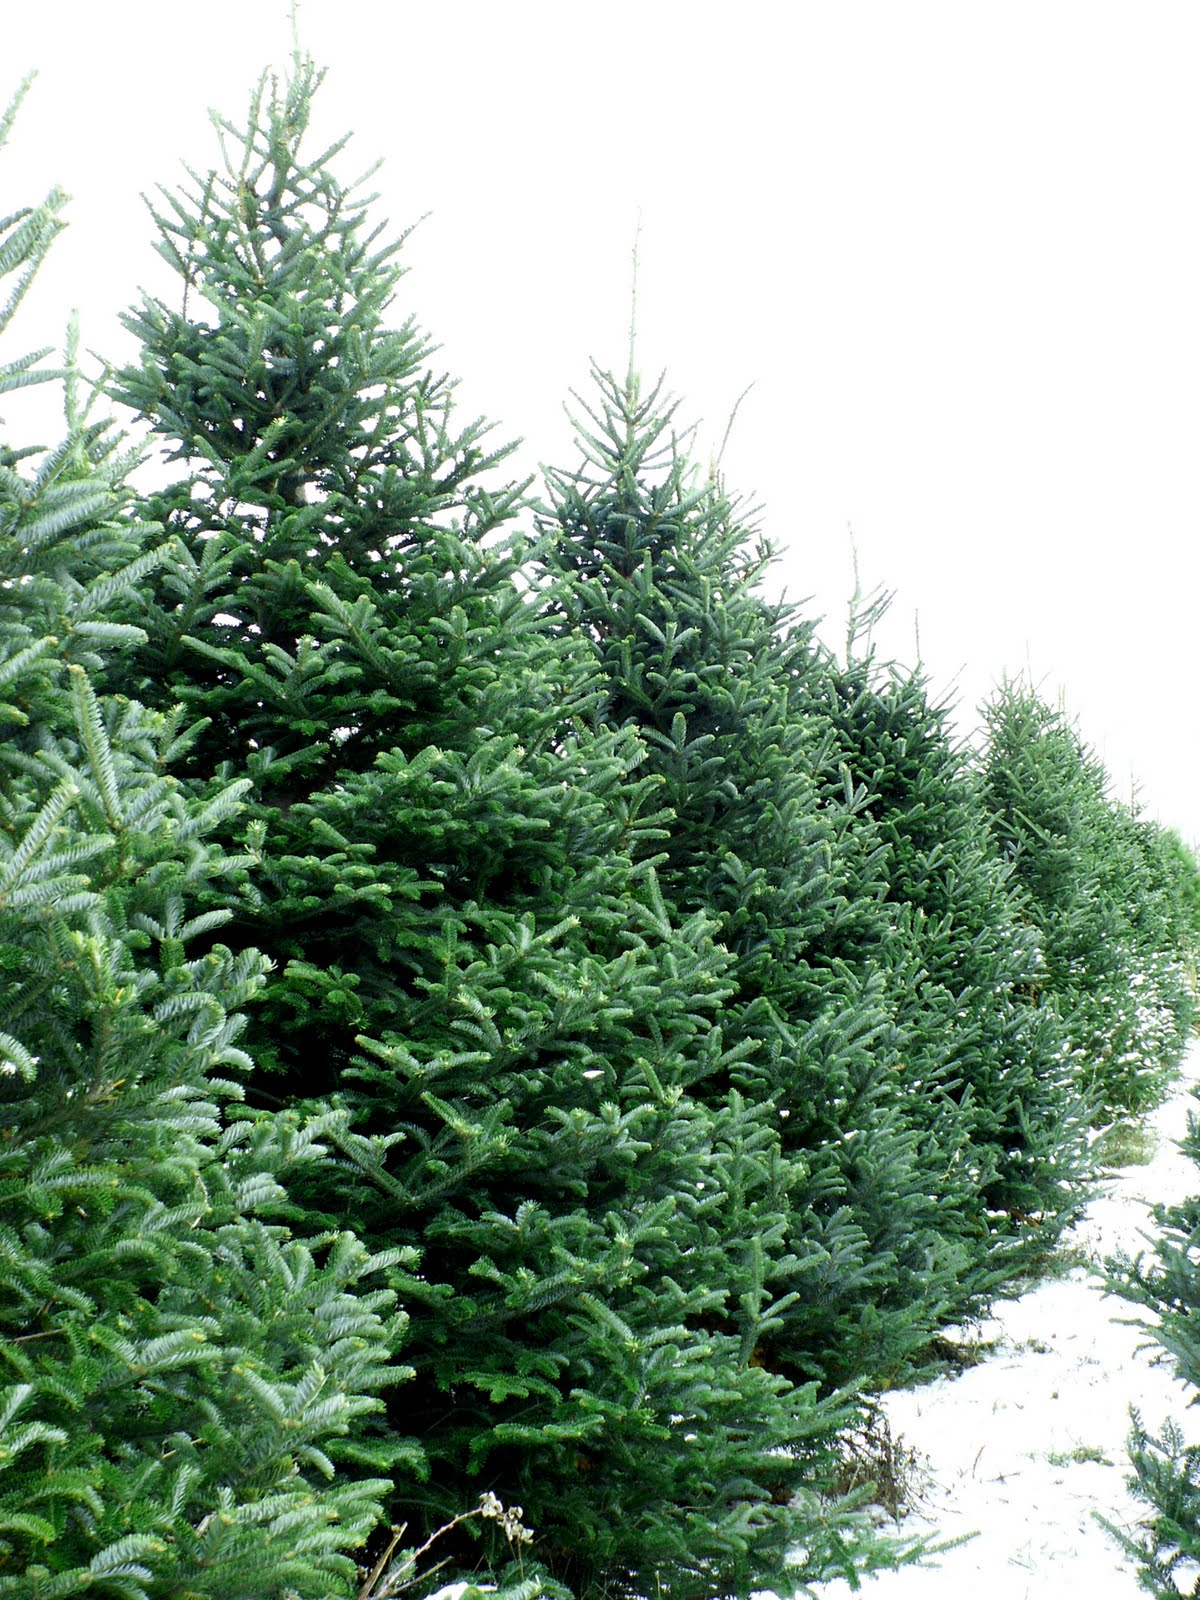 Eckert's Country Store & Farms: O Christmas Tree! O Christmas Tree!